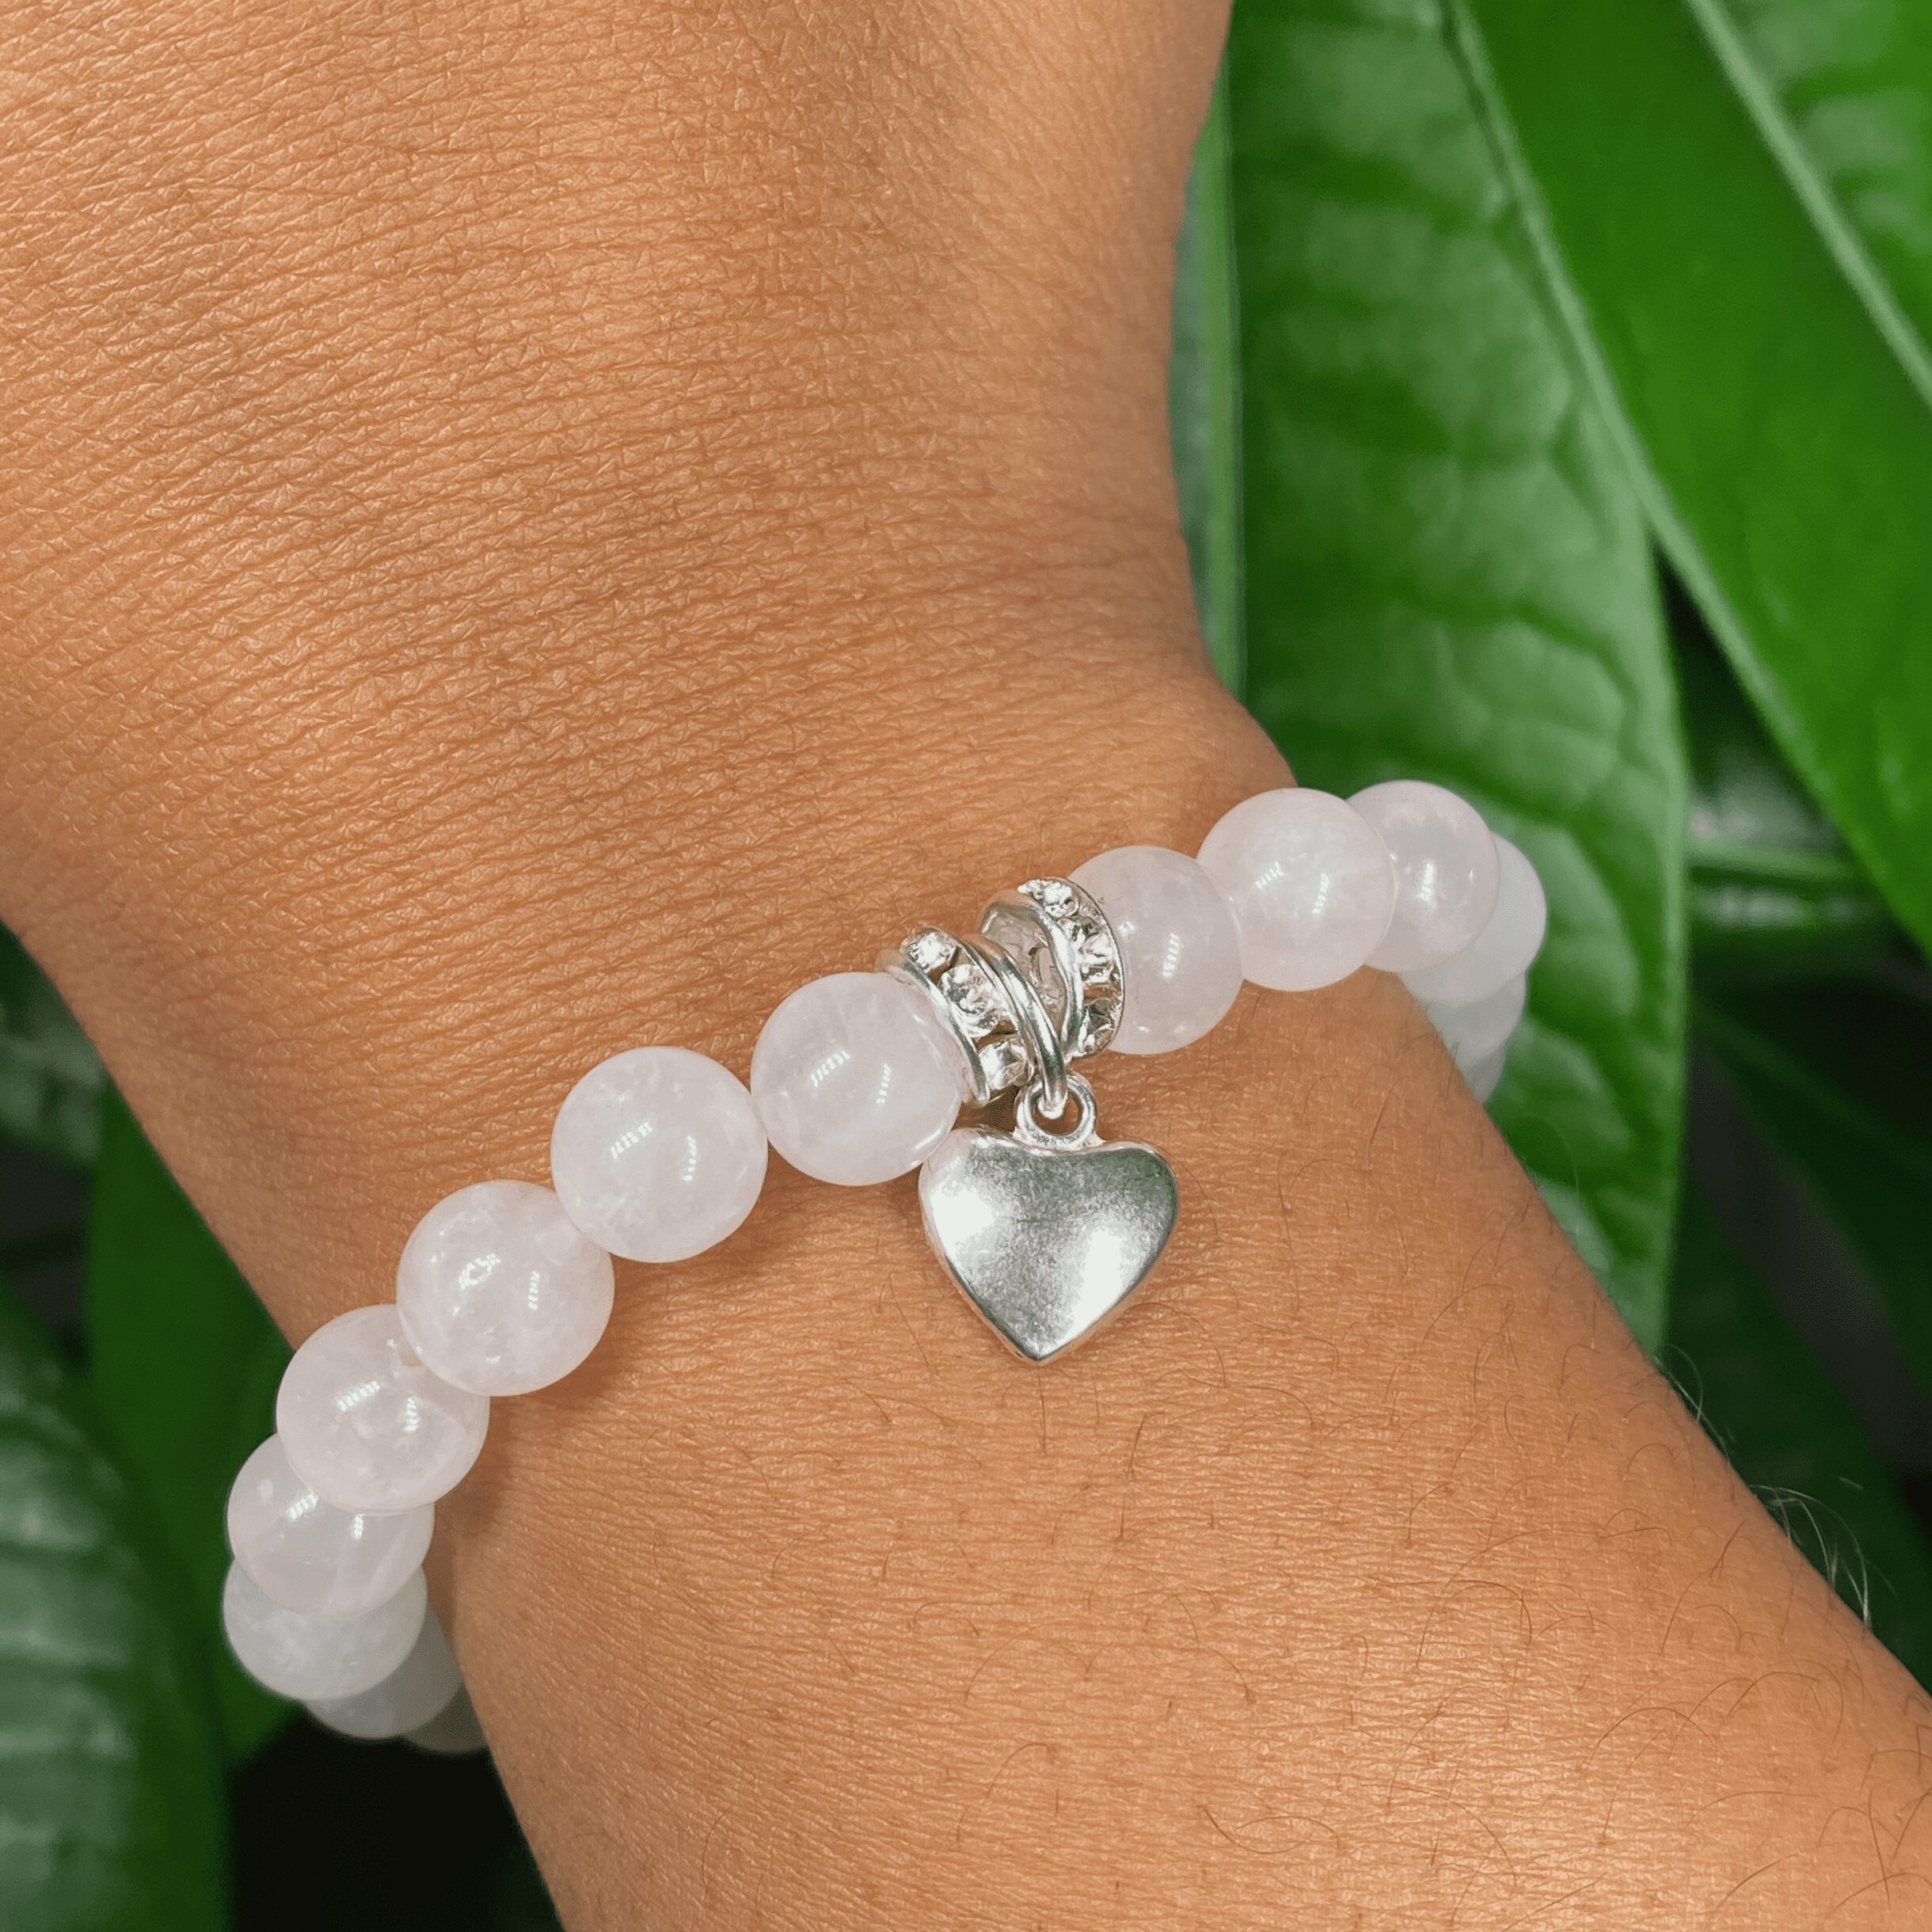 Handmade Rose Quartz Crystal bracelet with heart charm